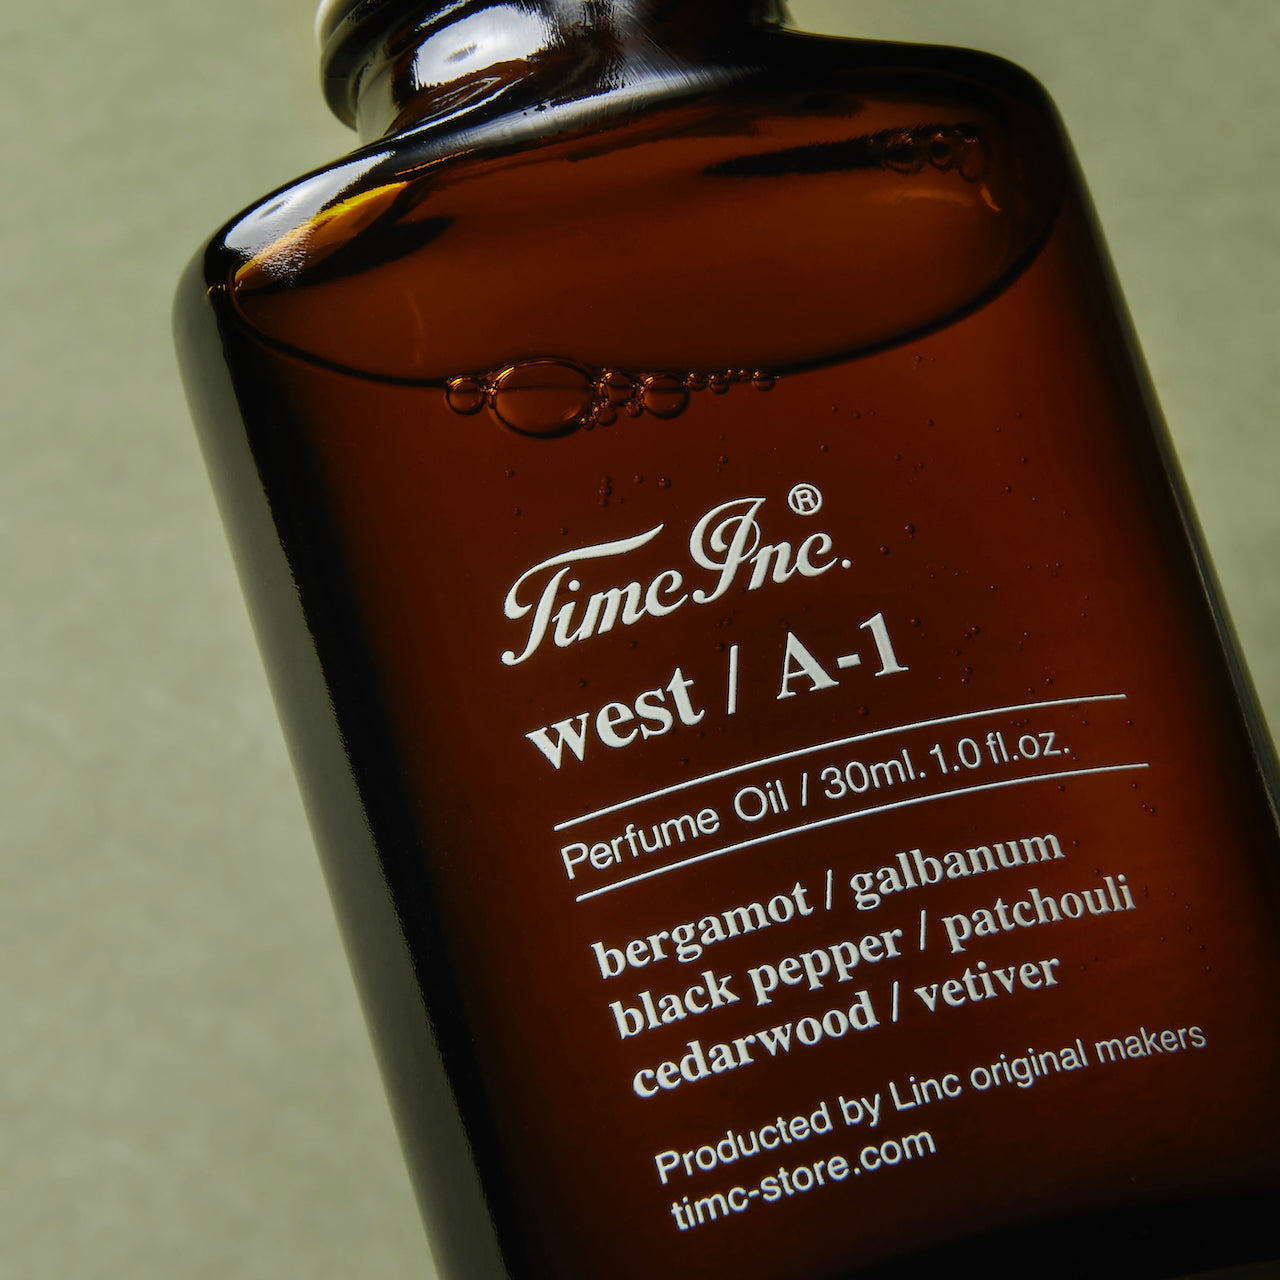 Perfume Oil west / A-1